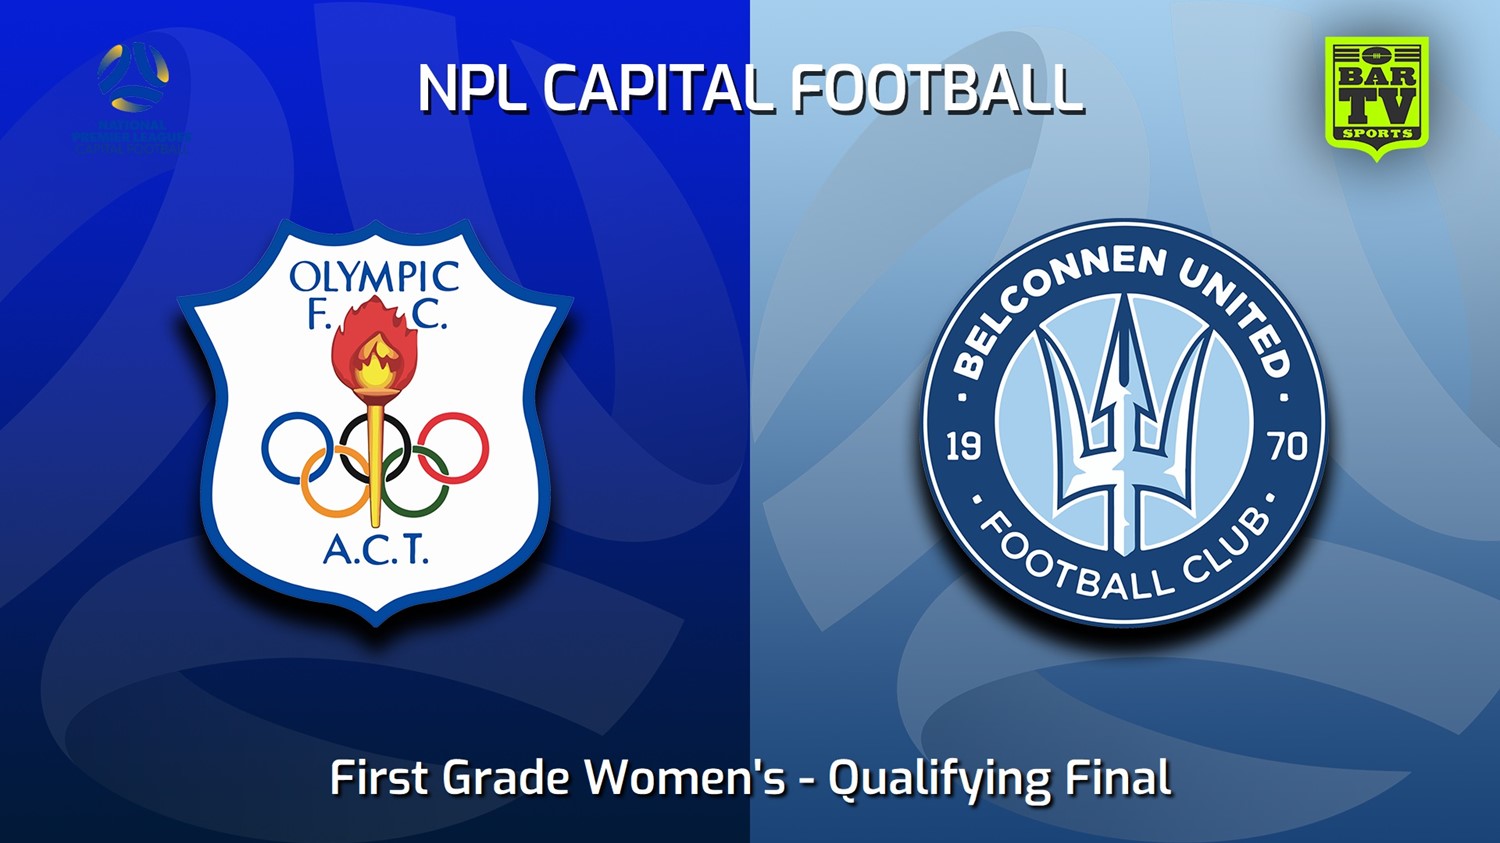 230913-NPL Women - 1st Grade - Capital Football Finals Qualifying Final - Canberra Olympic FC (women) v Belconnen United (women) Minigame Slate Image